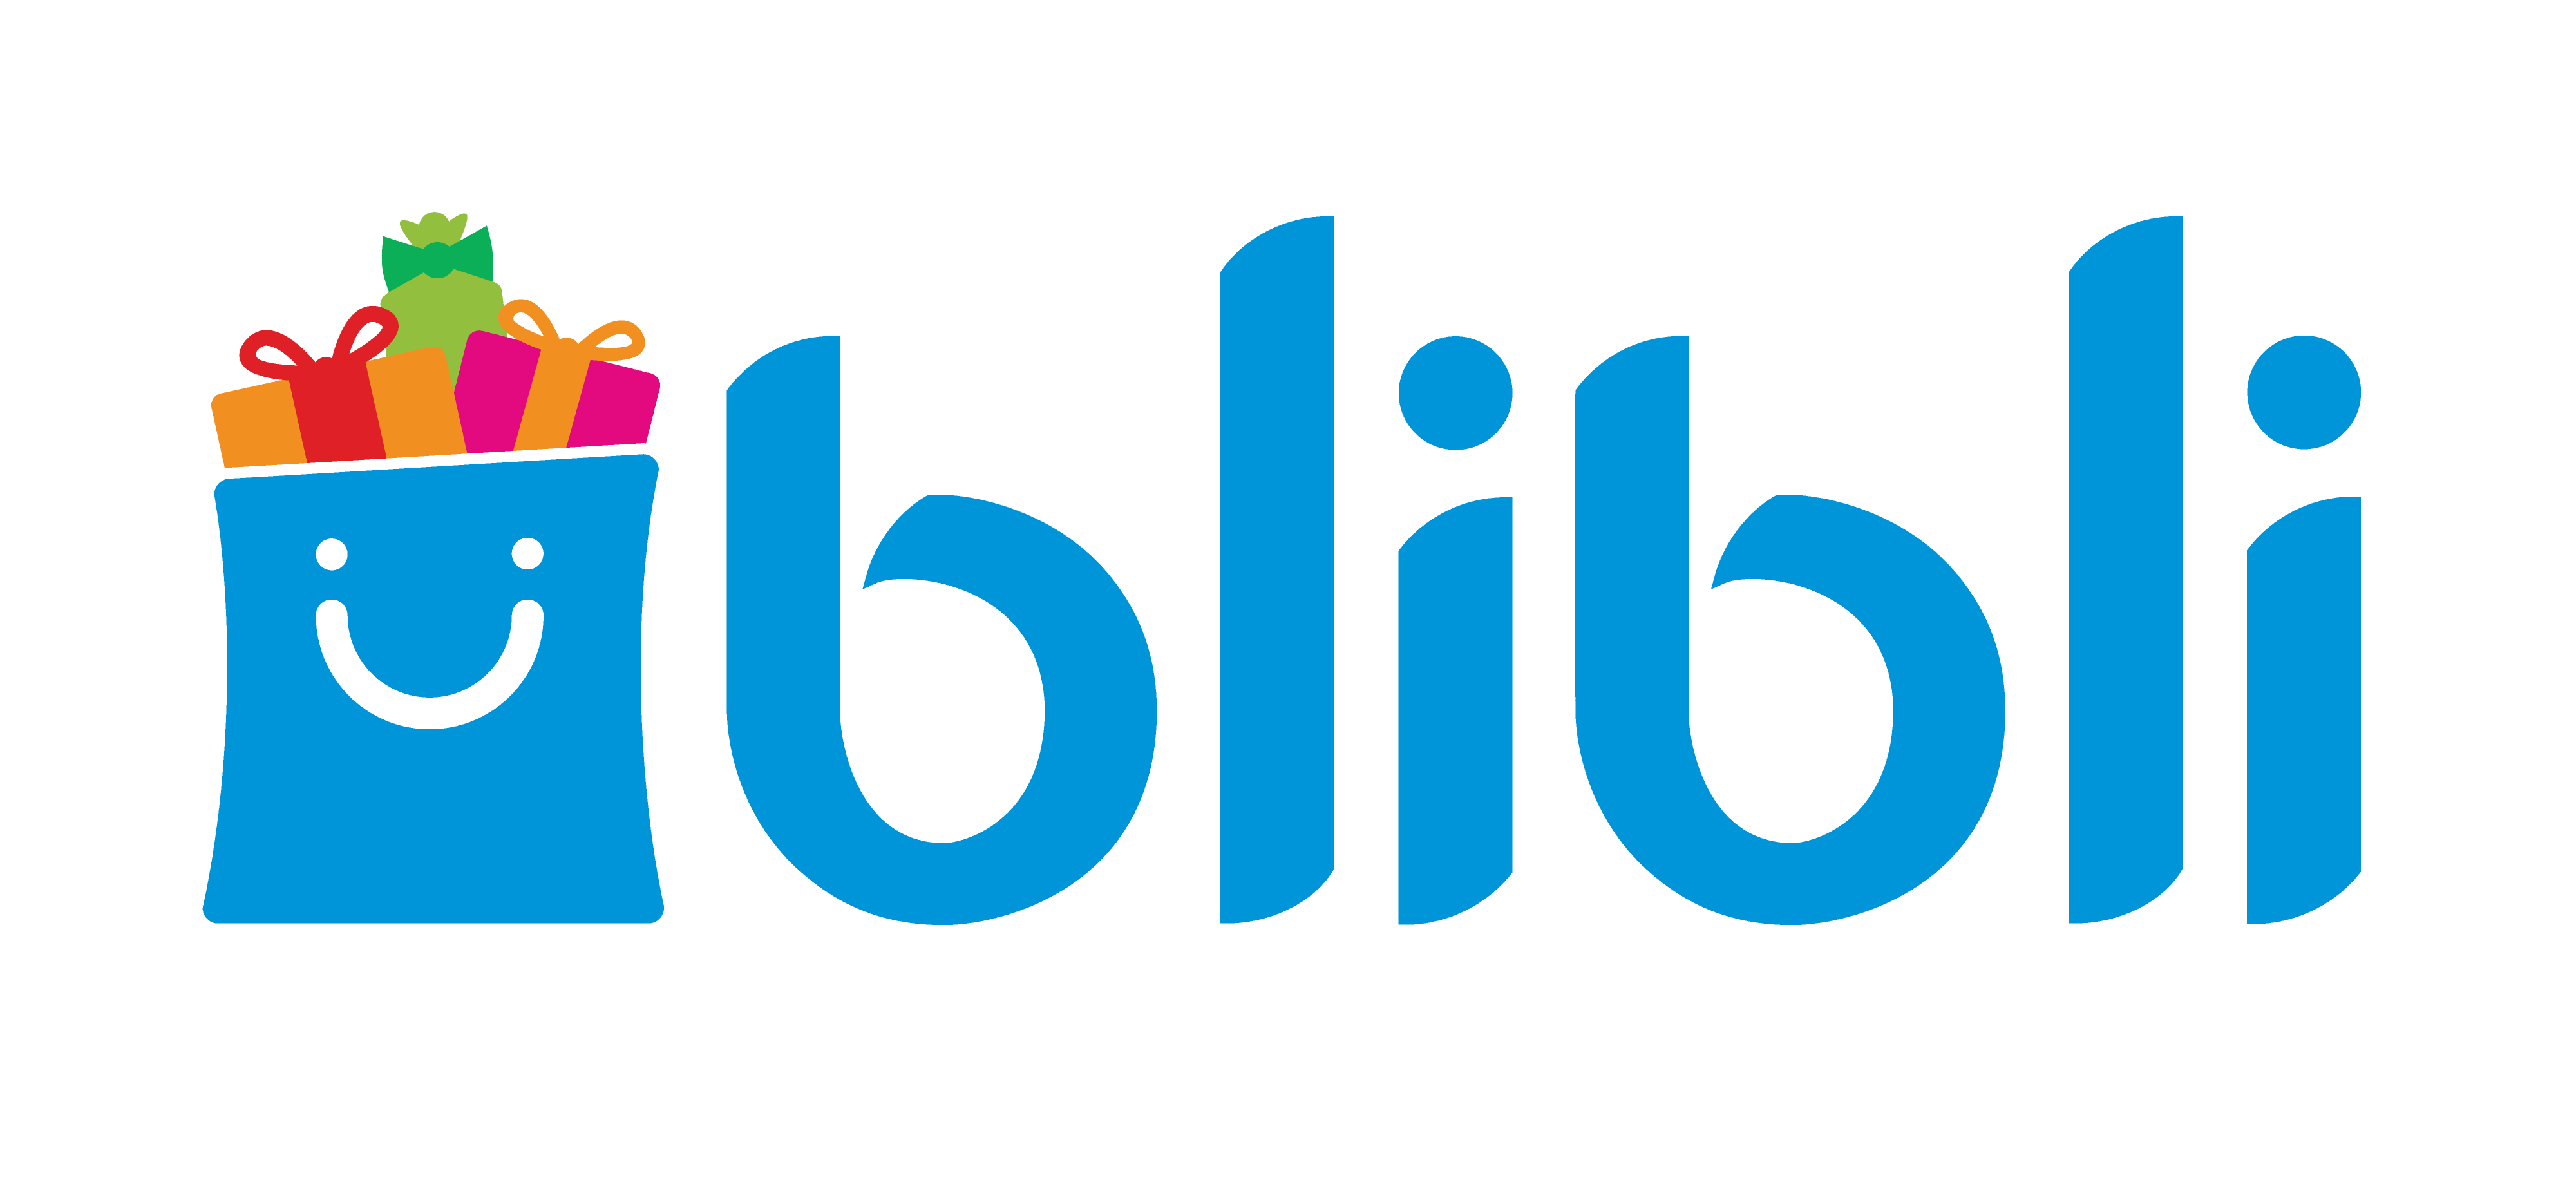 Blibli logo